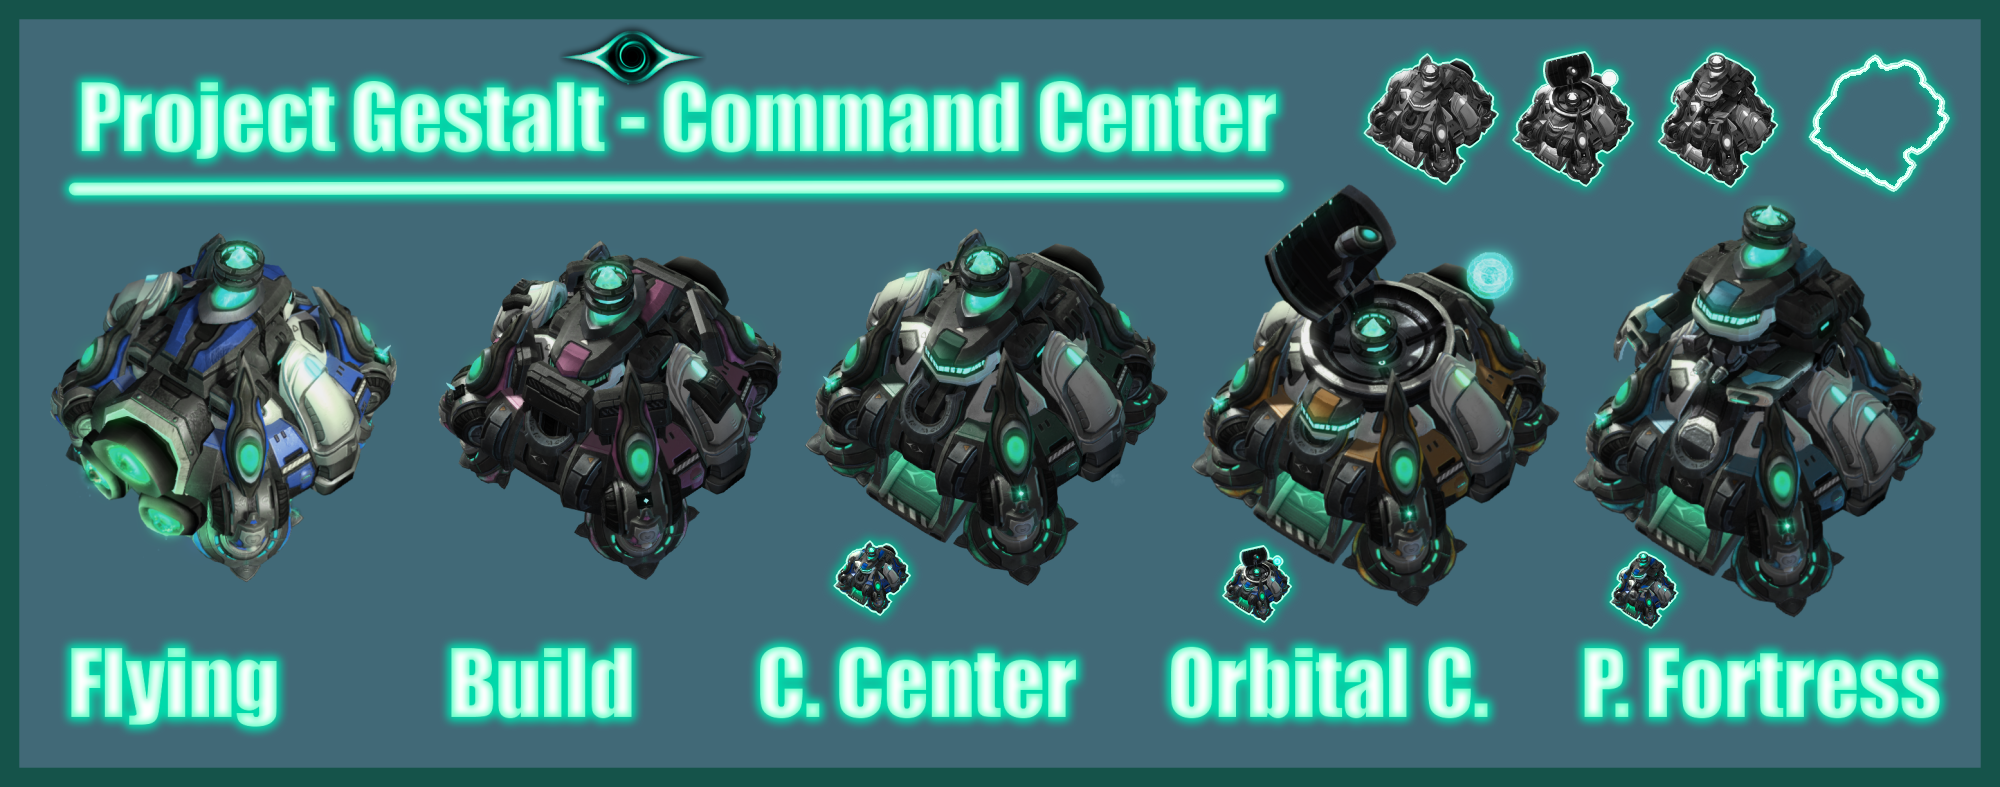 Project Gestalt - Command Center